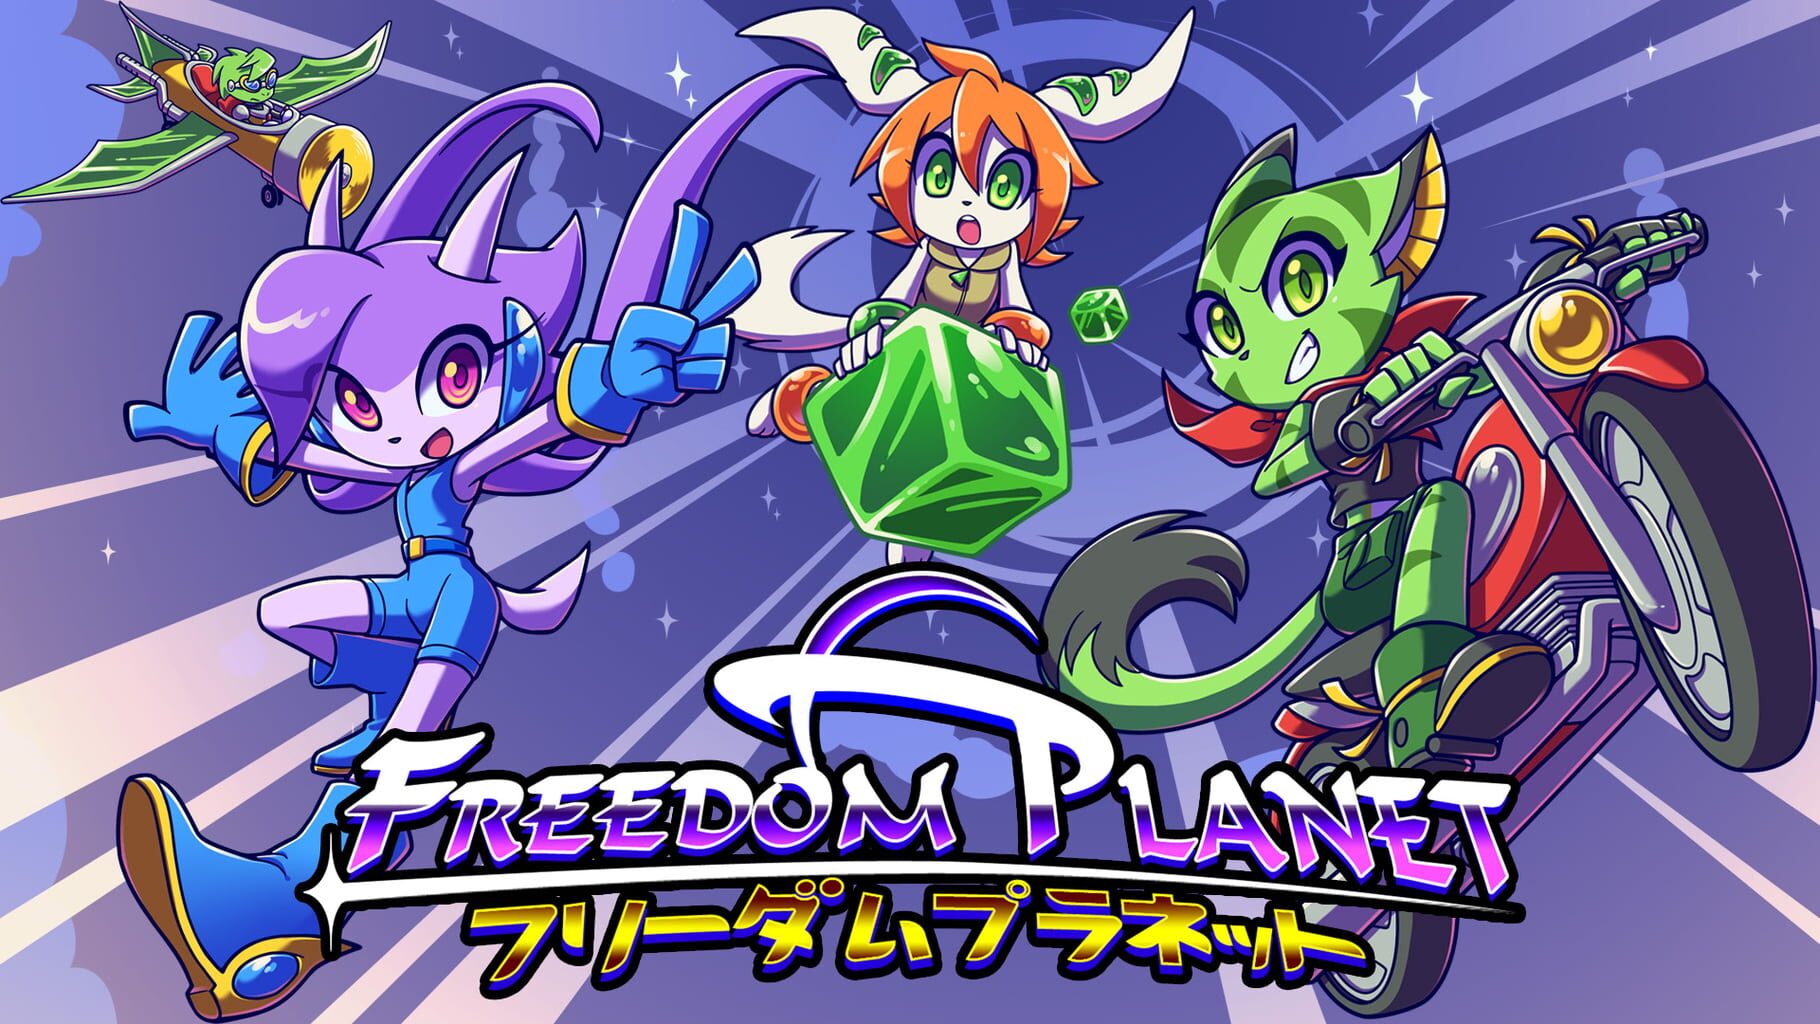 Freedom Planet artwork